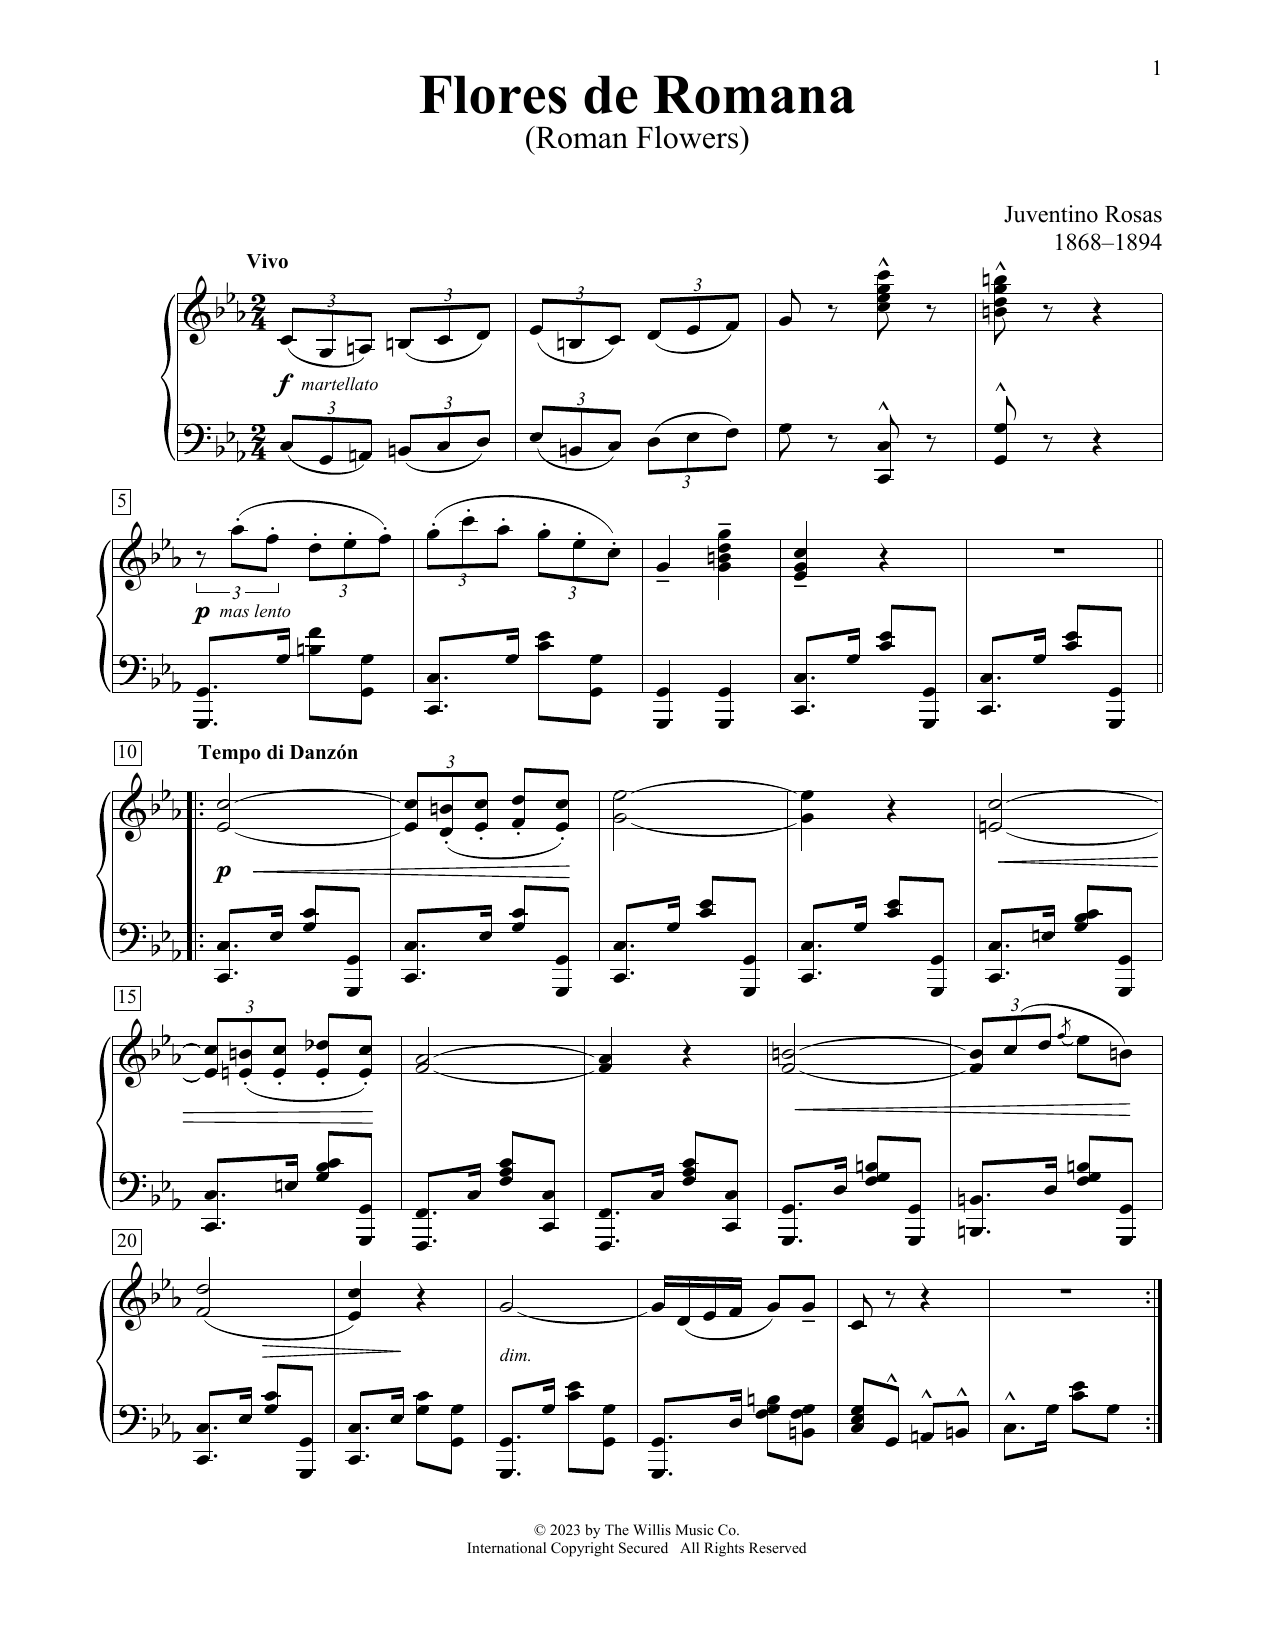 Juventino Rosas Flores De Romana sheet music notes printable PDF score